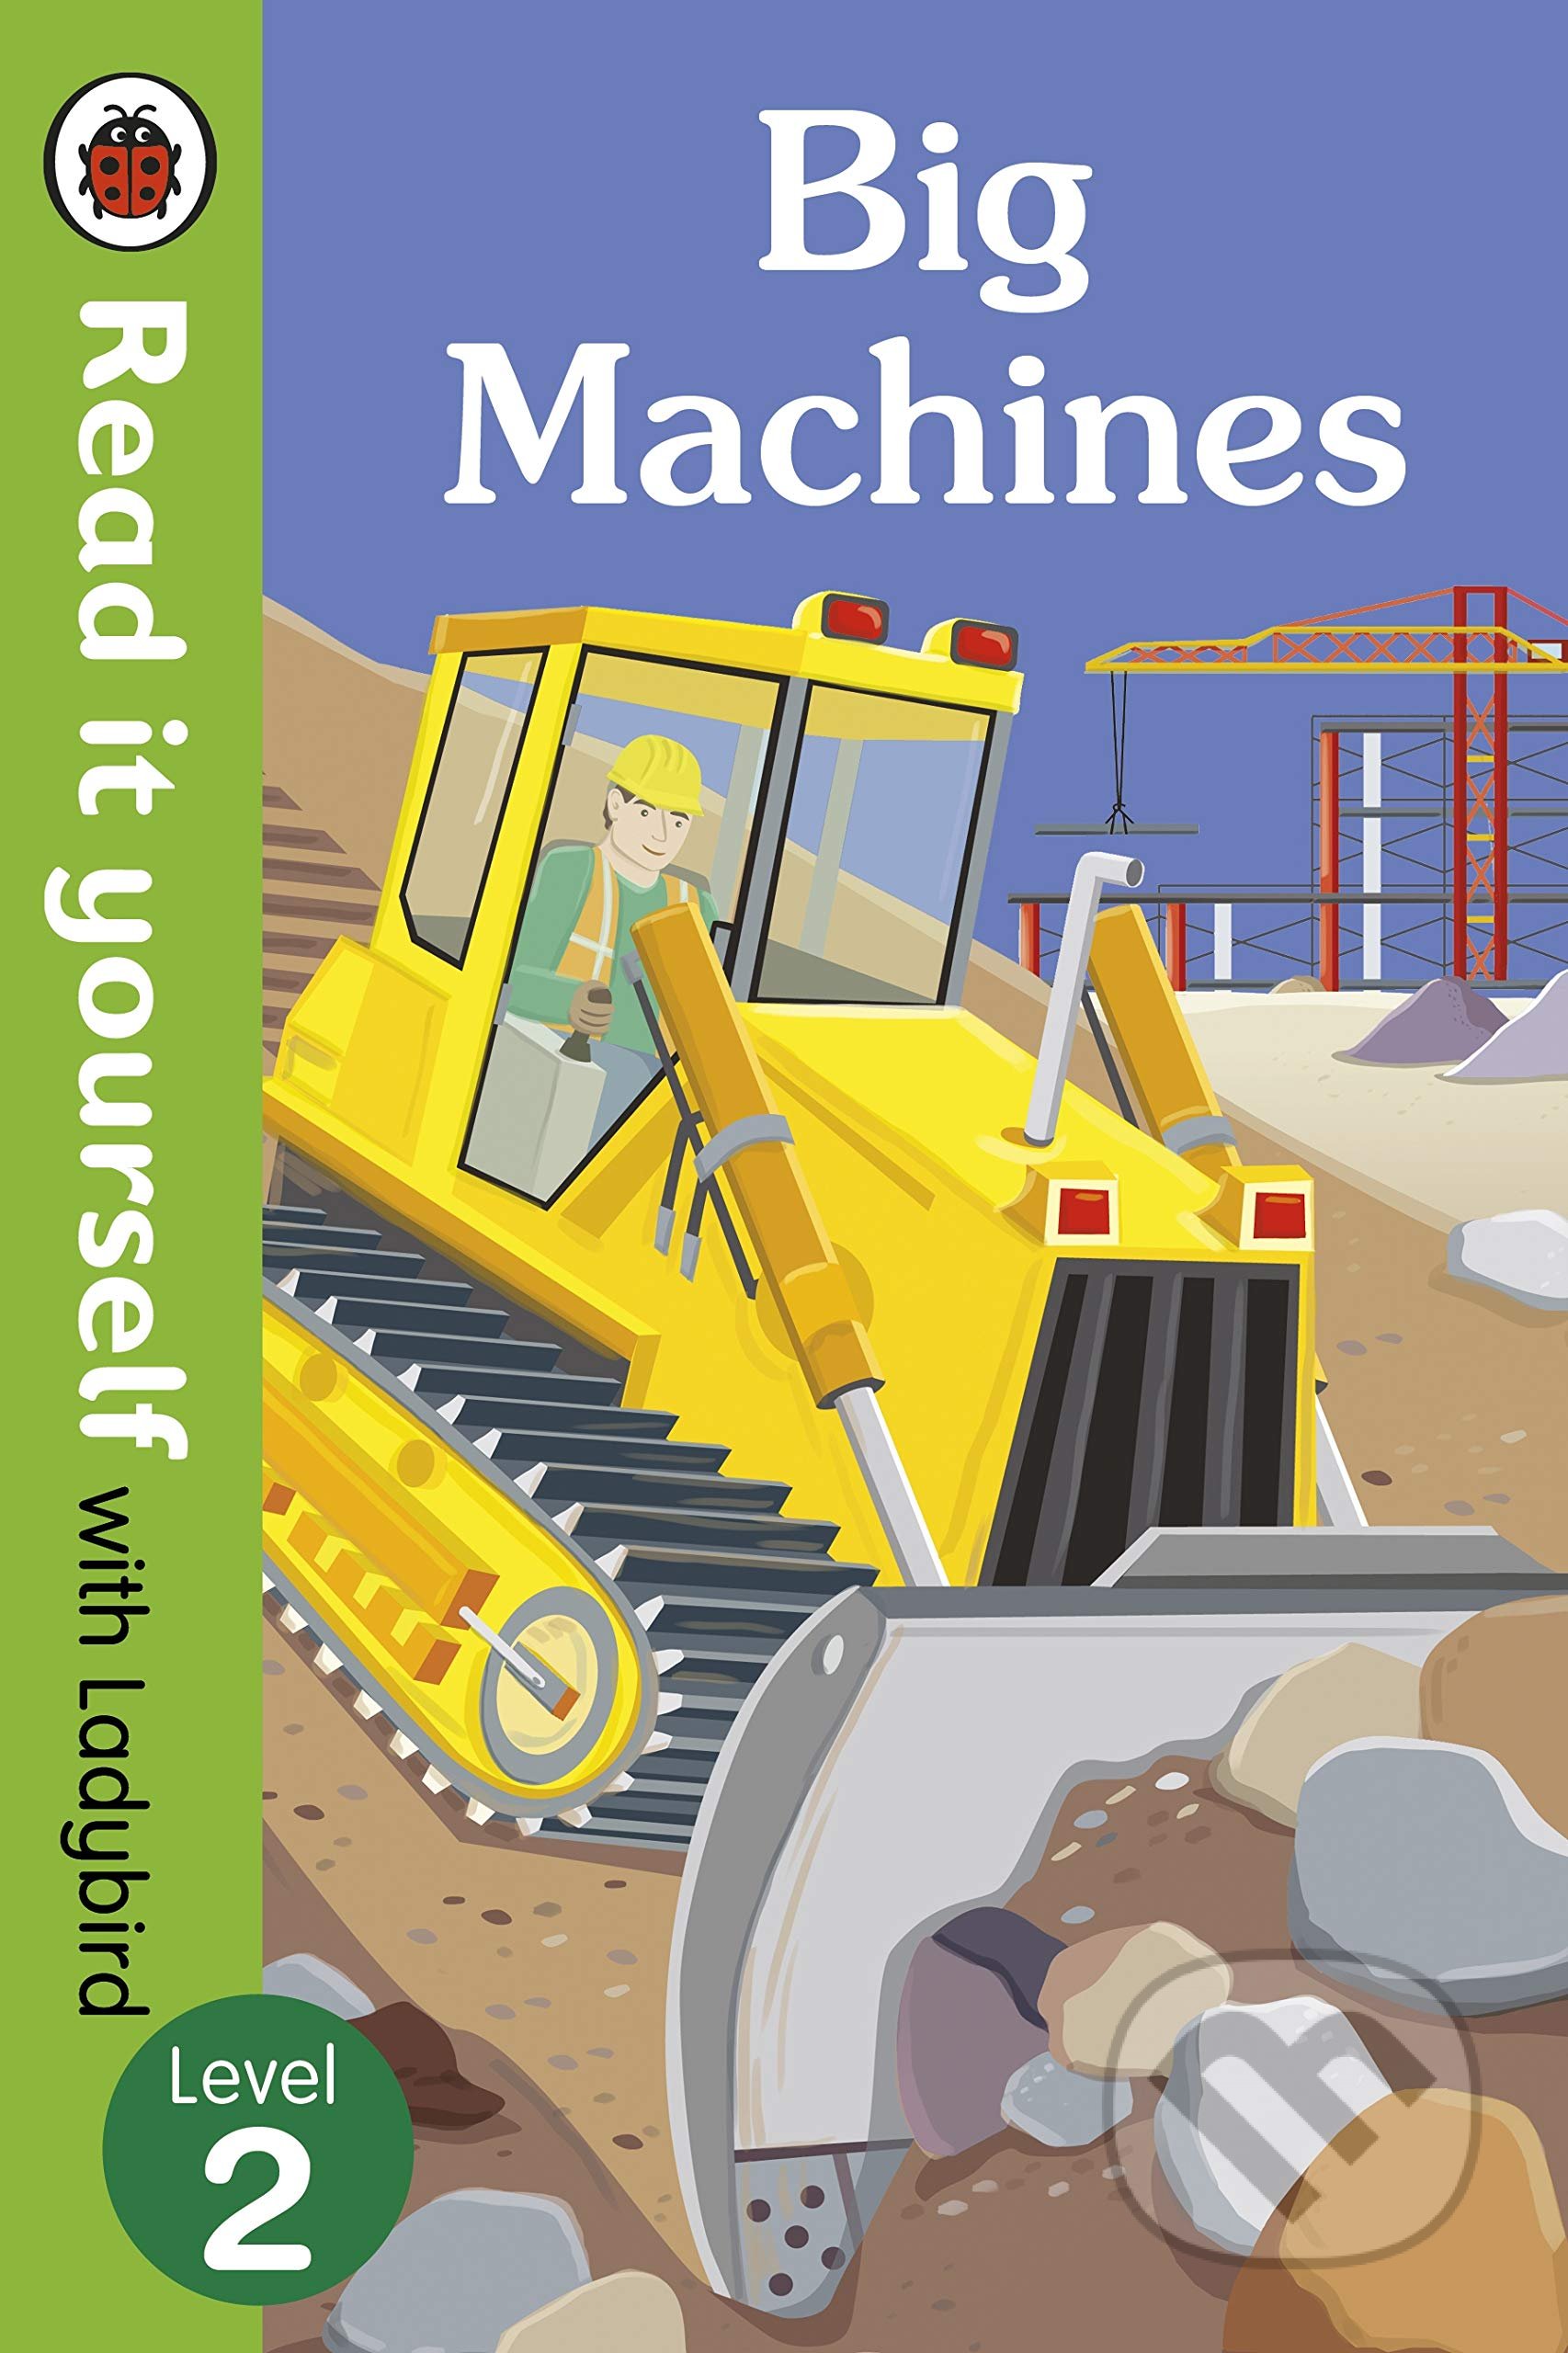 Big Machines, Ladybird Books, 2015